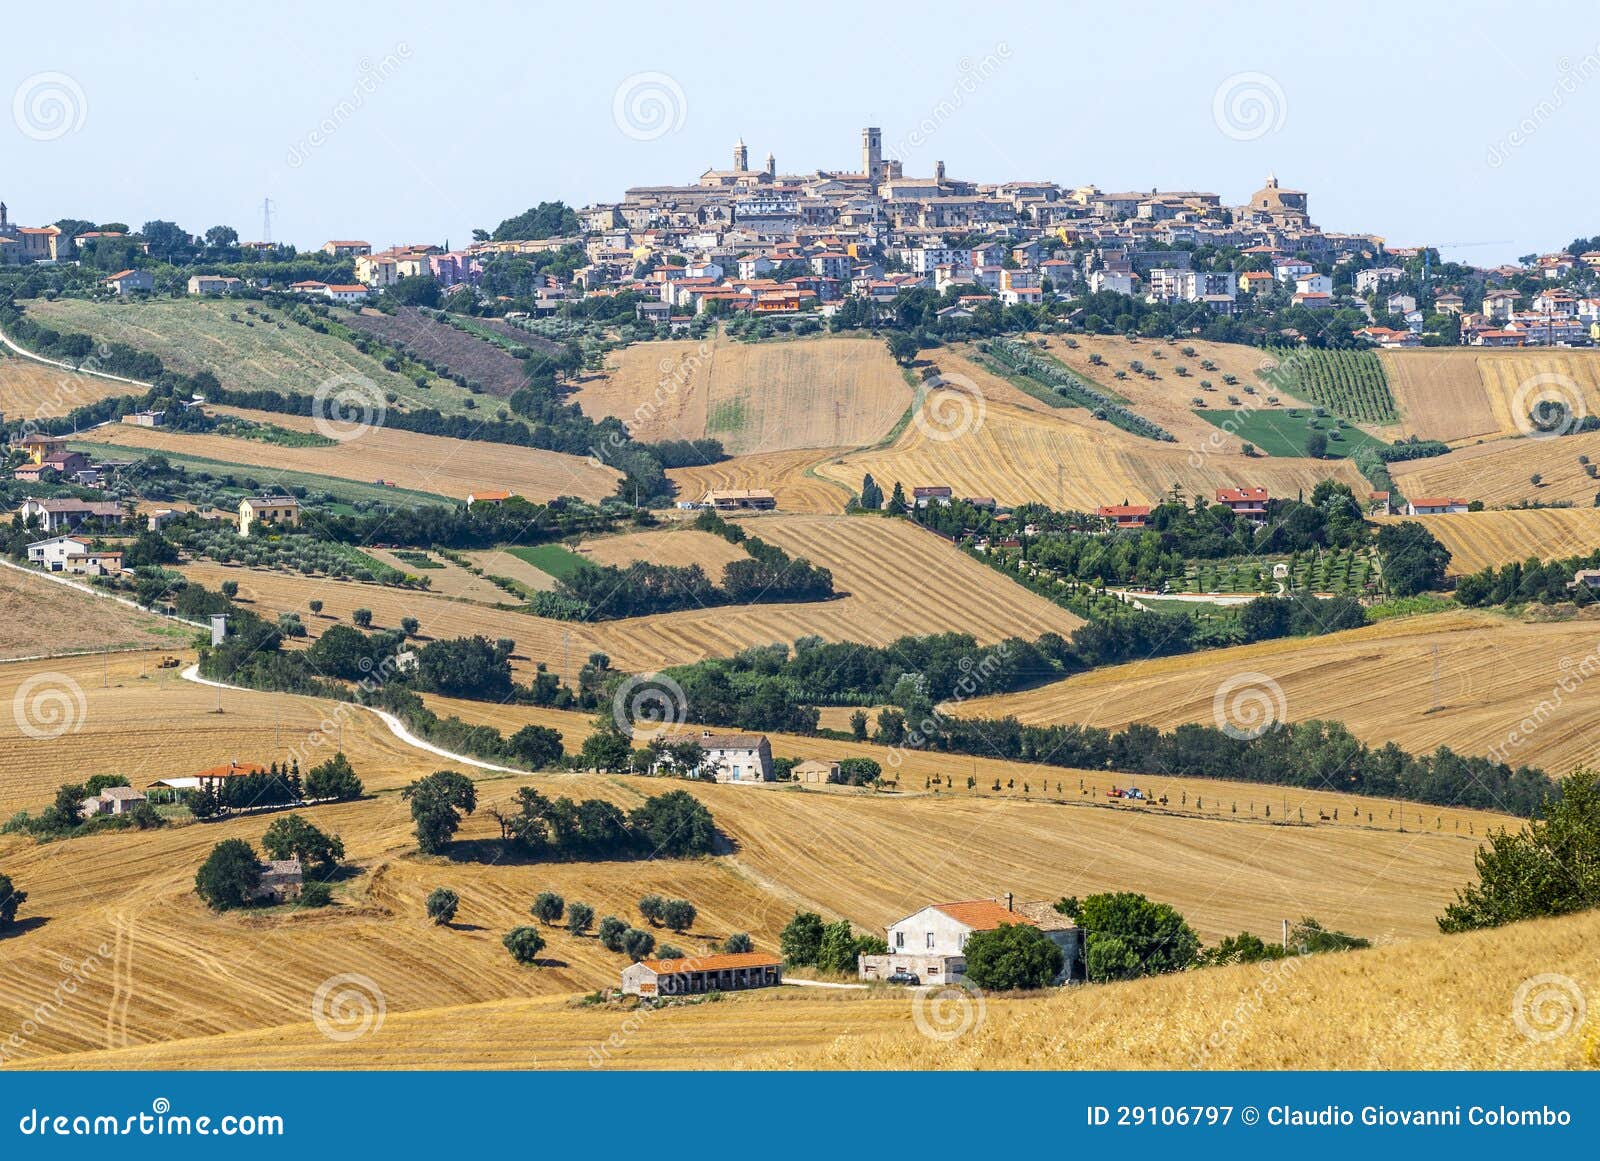 panoramic view of potenza picena